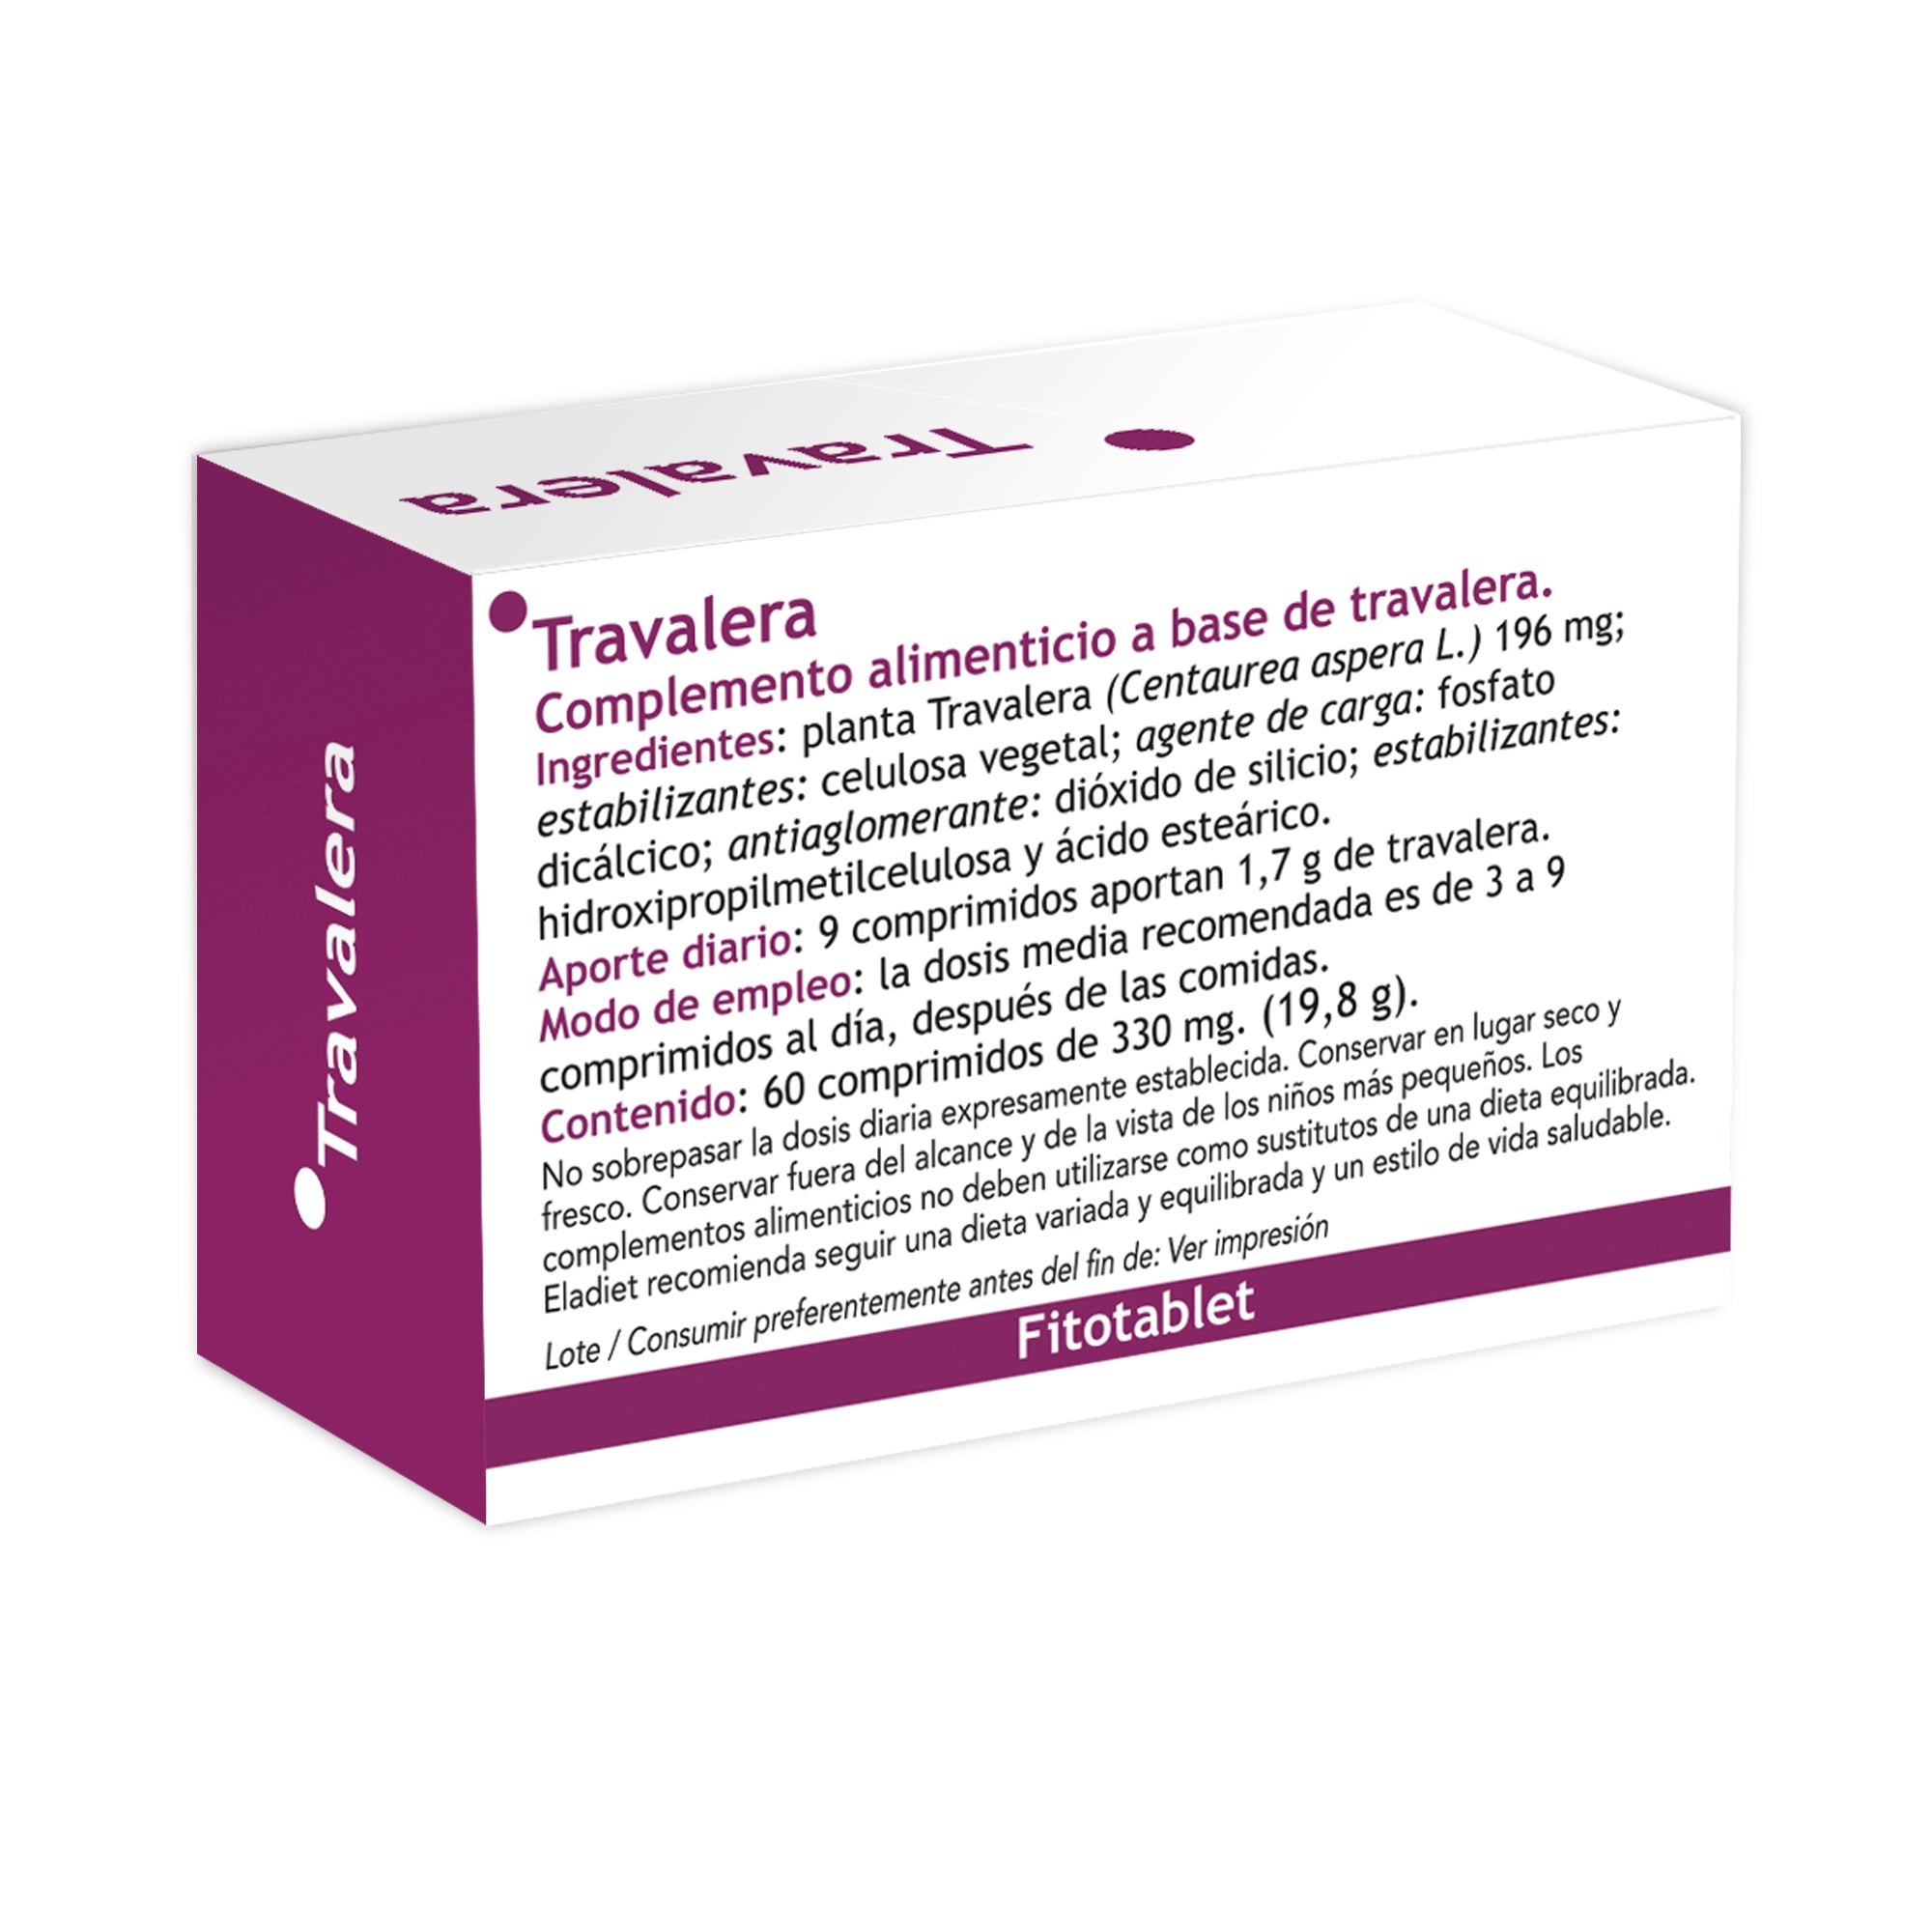 Eladiet - Fitotablet Travalera 330Mg 60 Comprimidos - Biopharmacia, Parafarmacia online